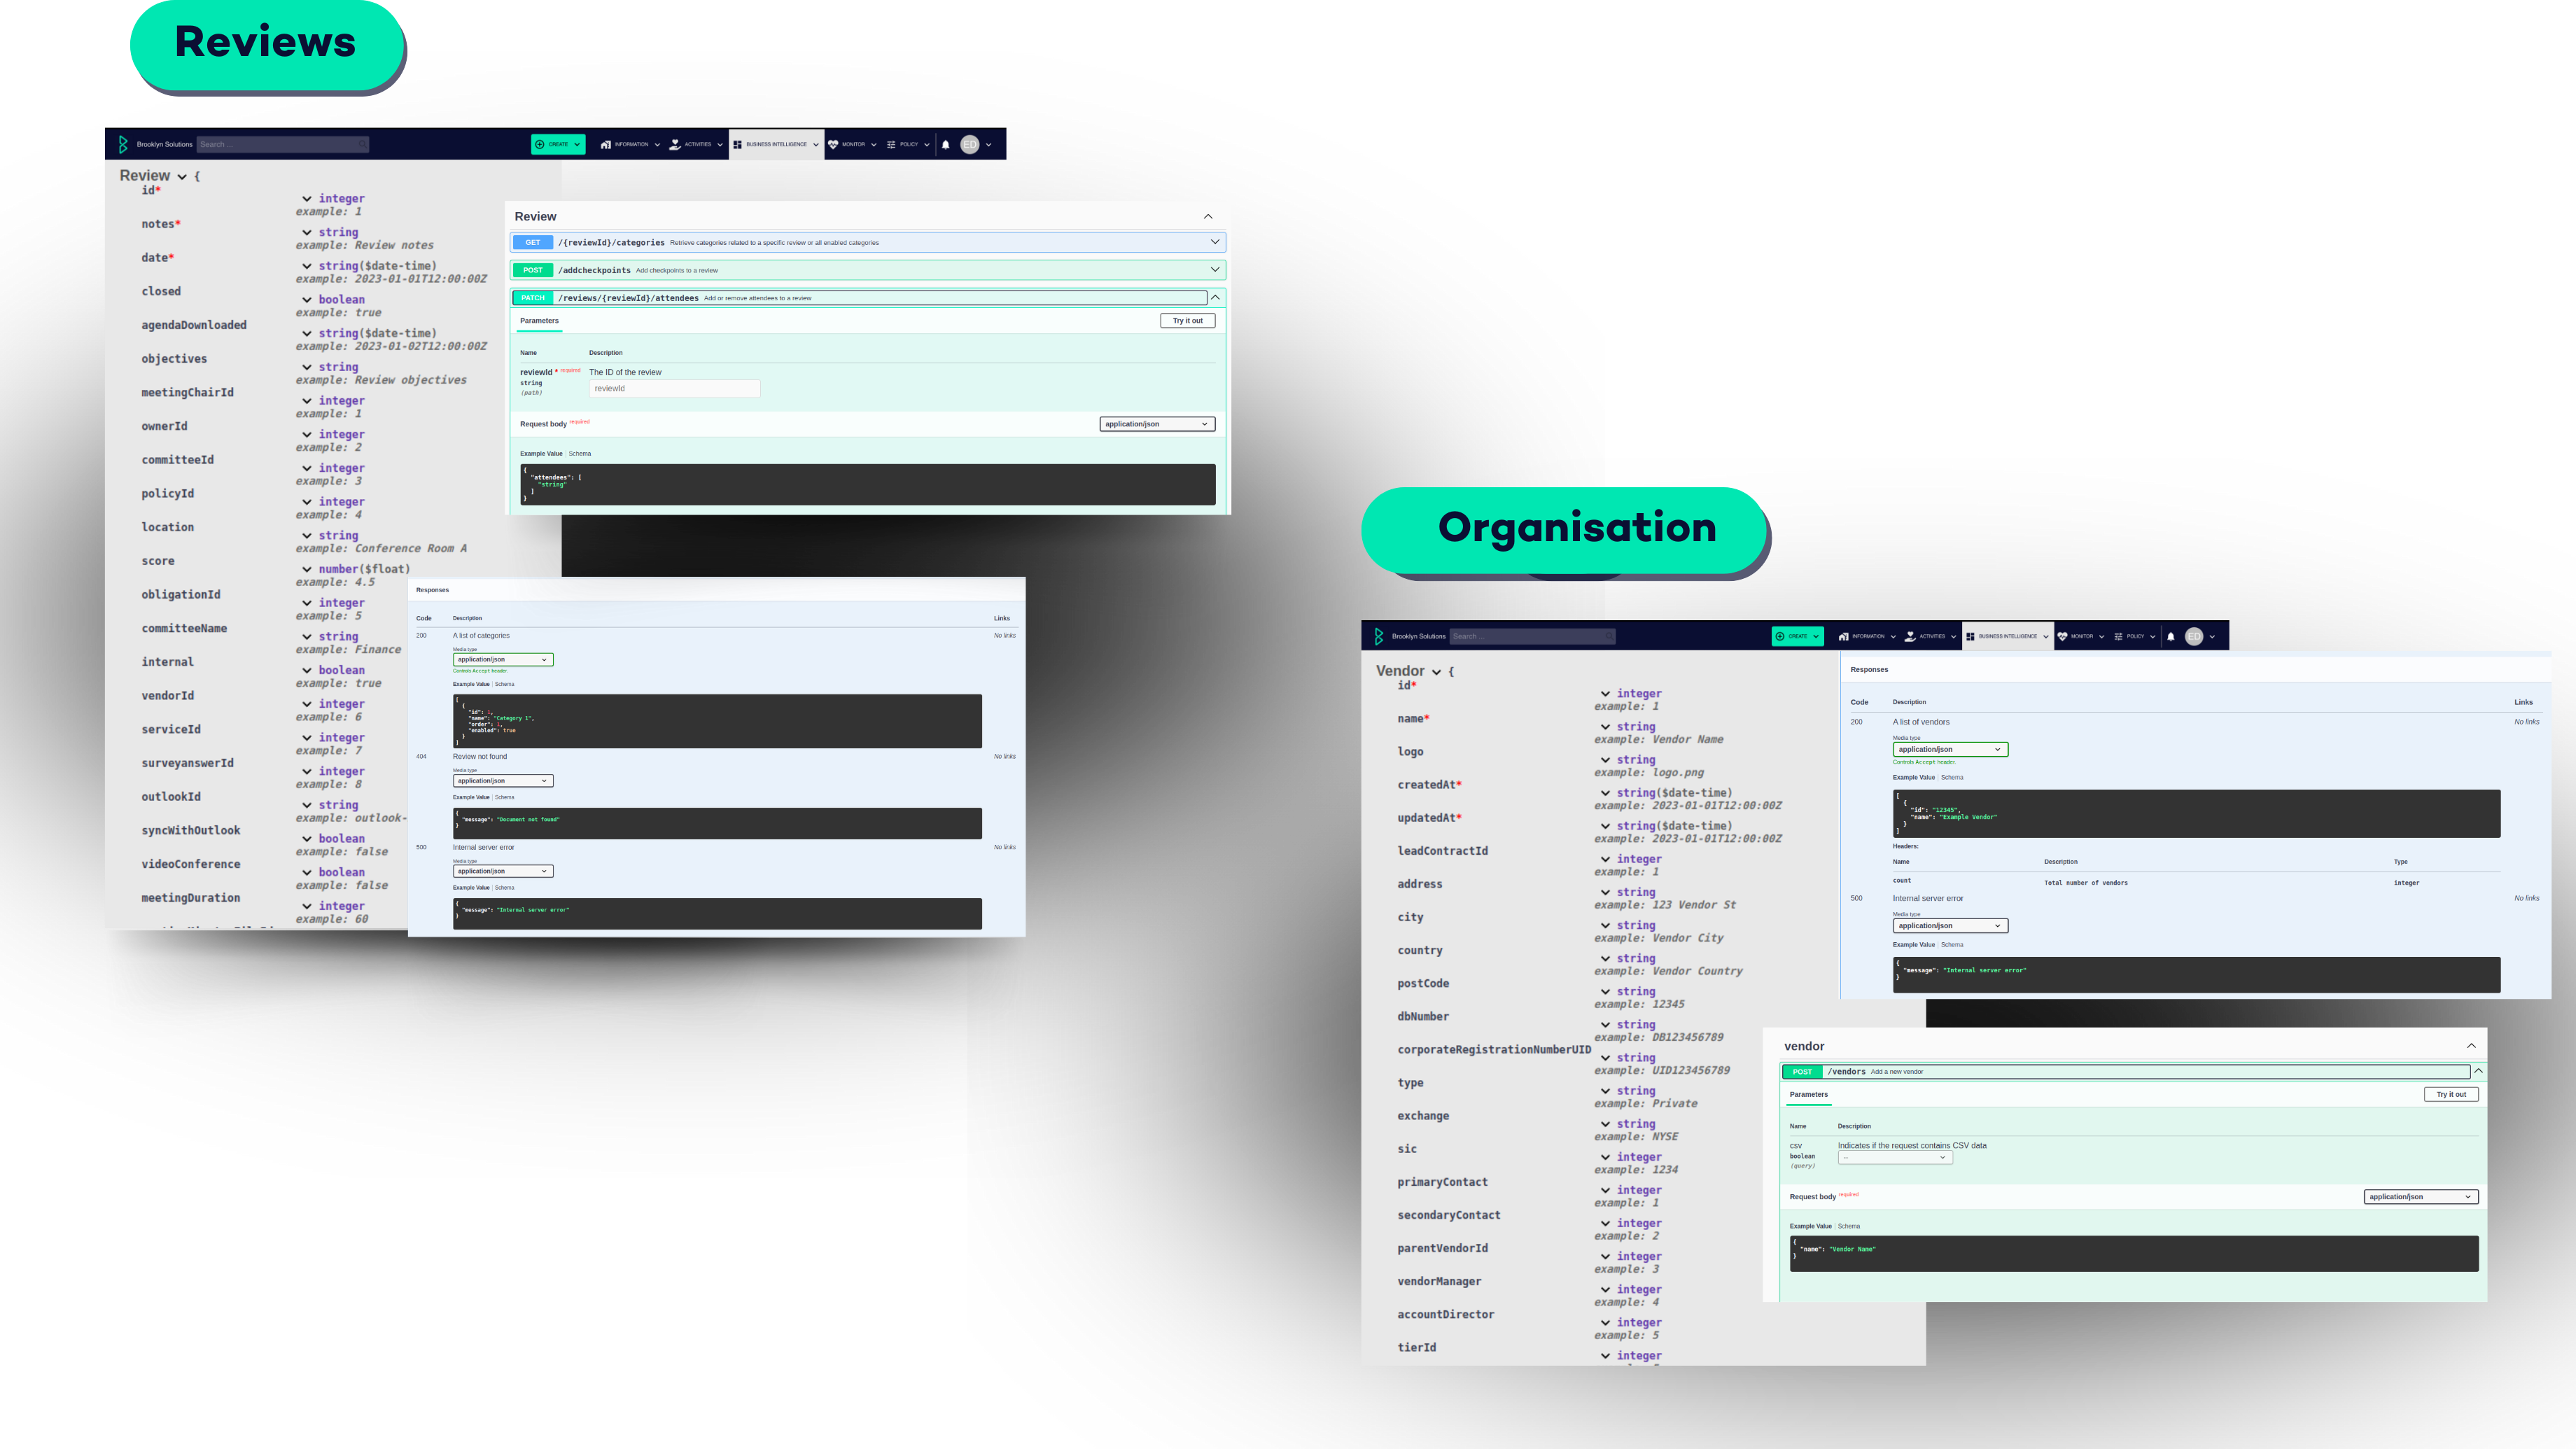 Reviews & Organisation API